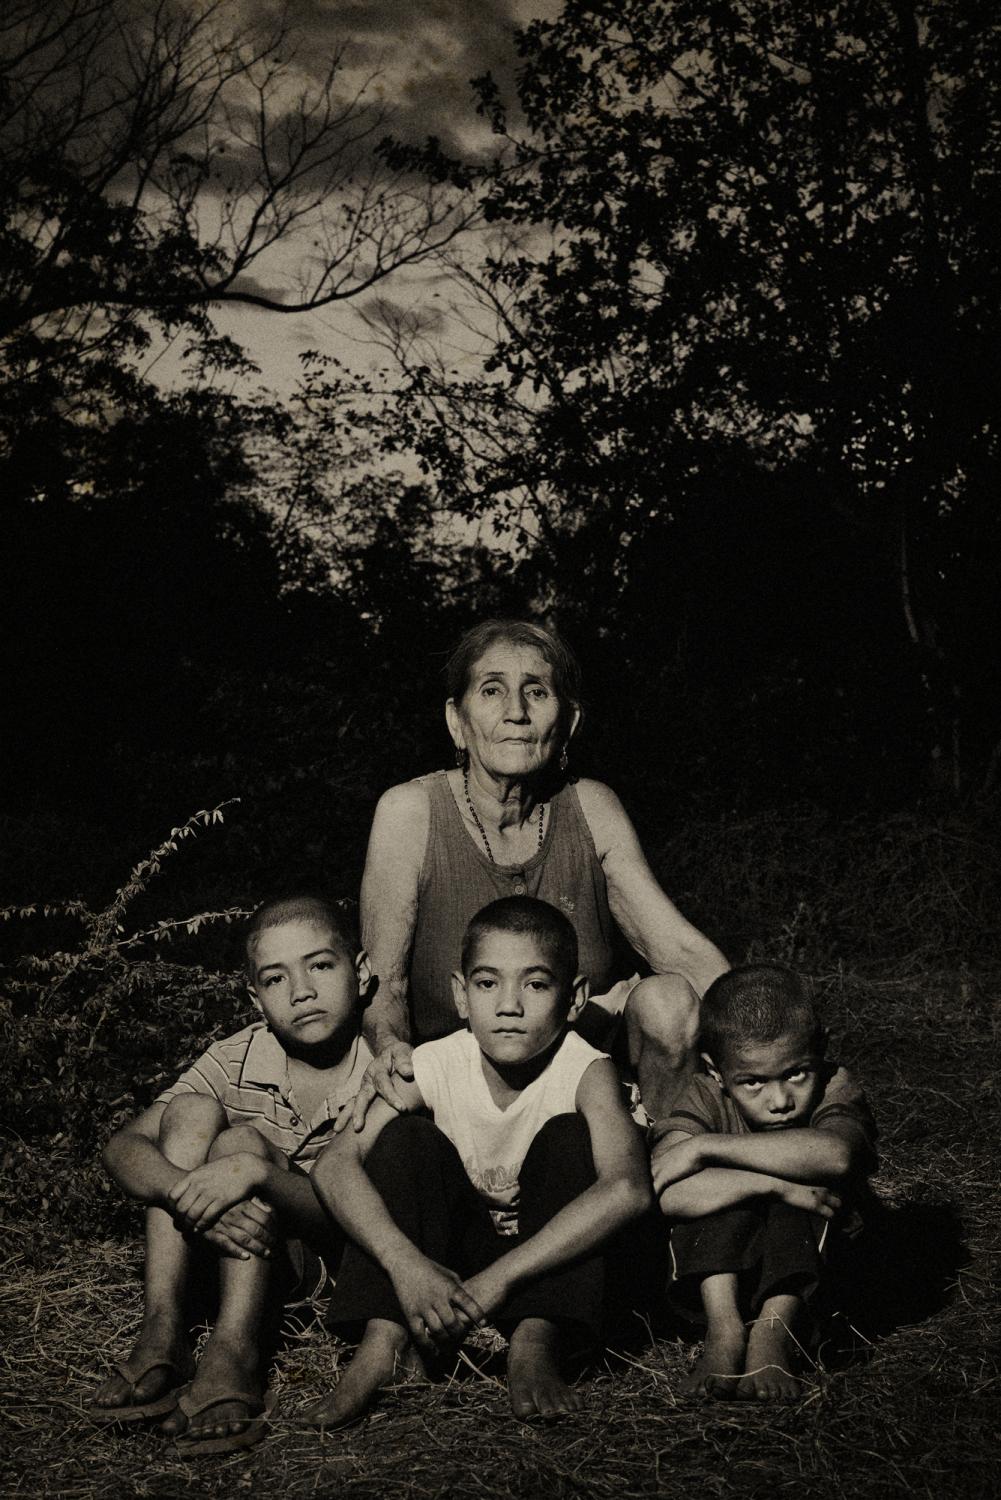 Honduras. February 2008. Faustina Zambrano is the grandmother of Wilson Noel Avila (right), Gustavo Adolfo Avila (middle) and Oscar Javier Avila...